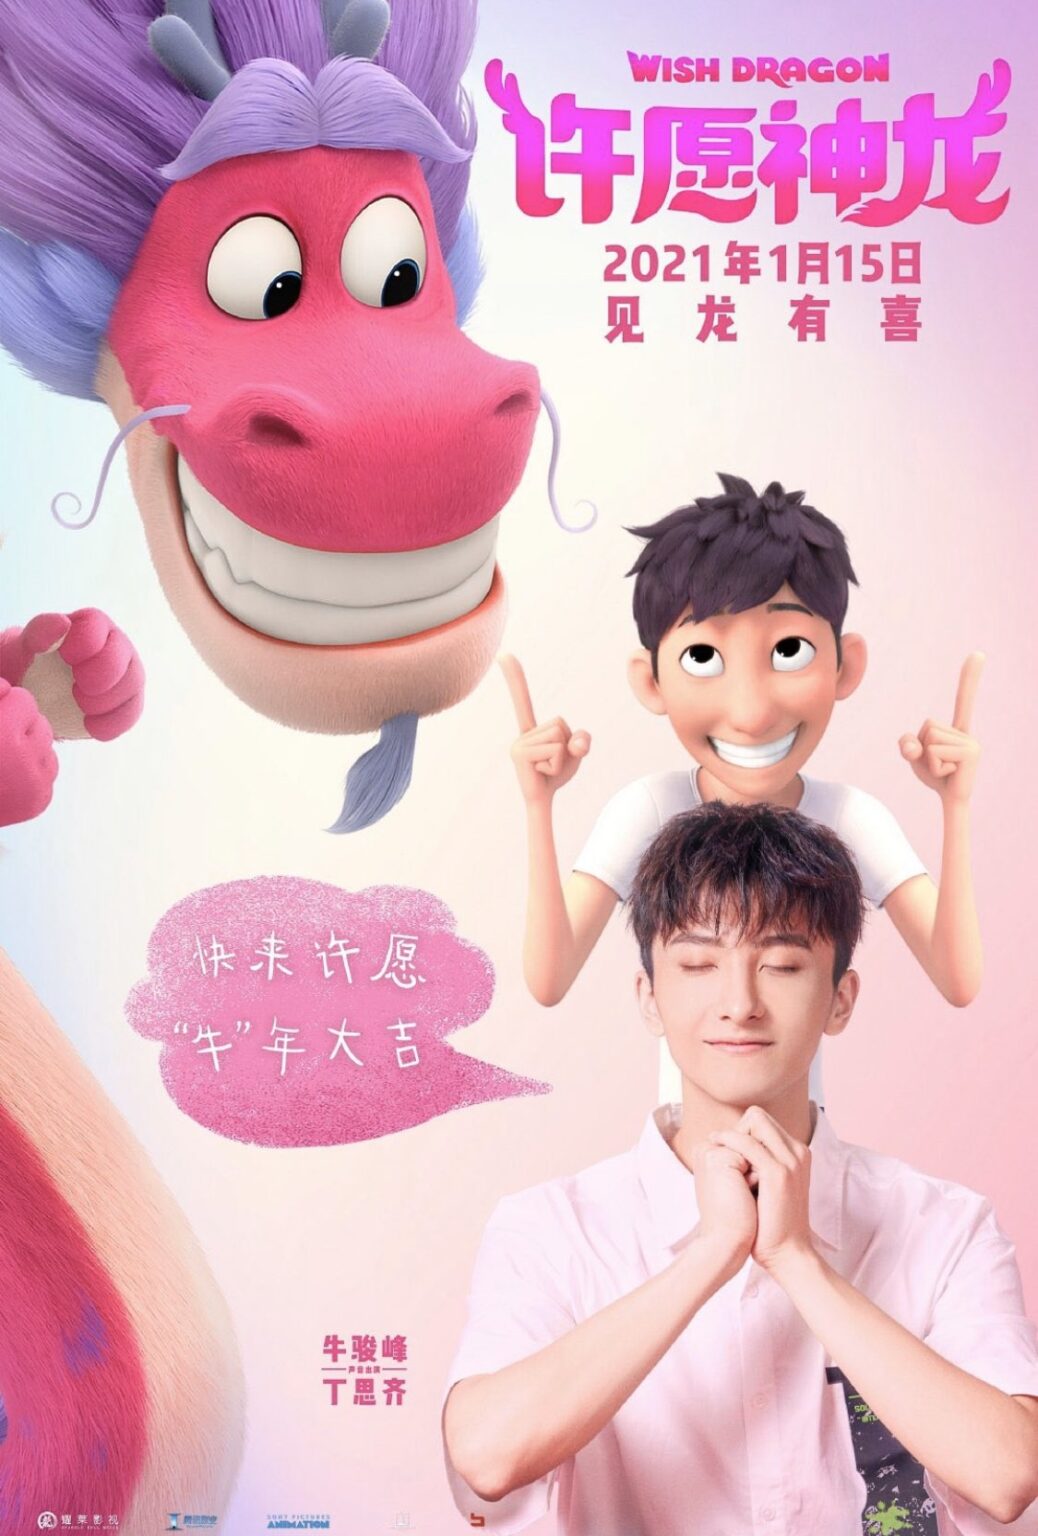 Wish Dragon Din and Li Na Posters - Cartoon Images